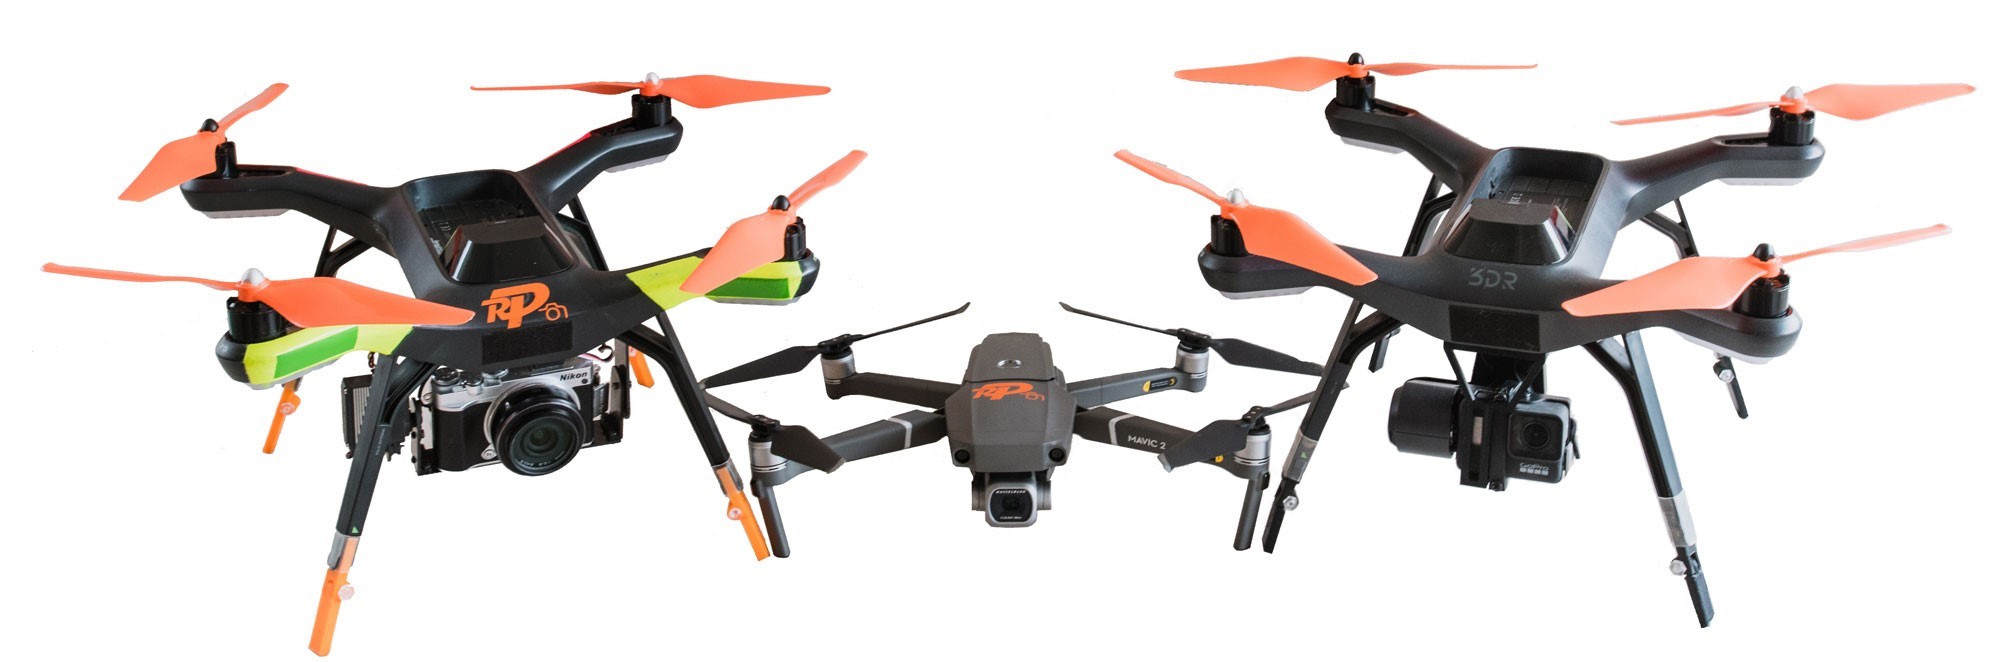 drone fleet rob power photography